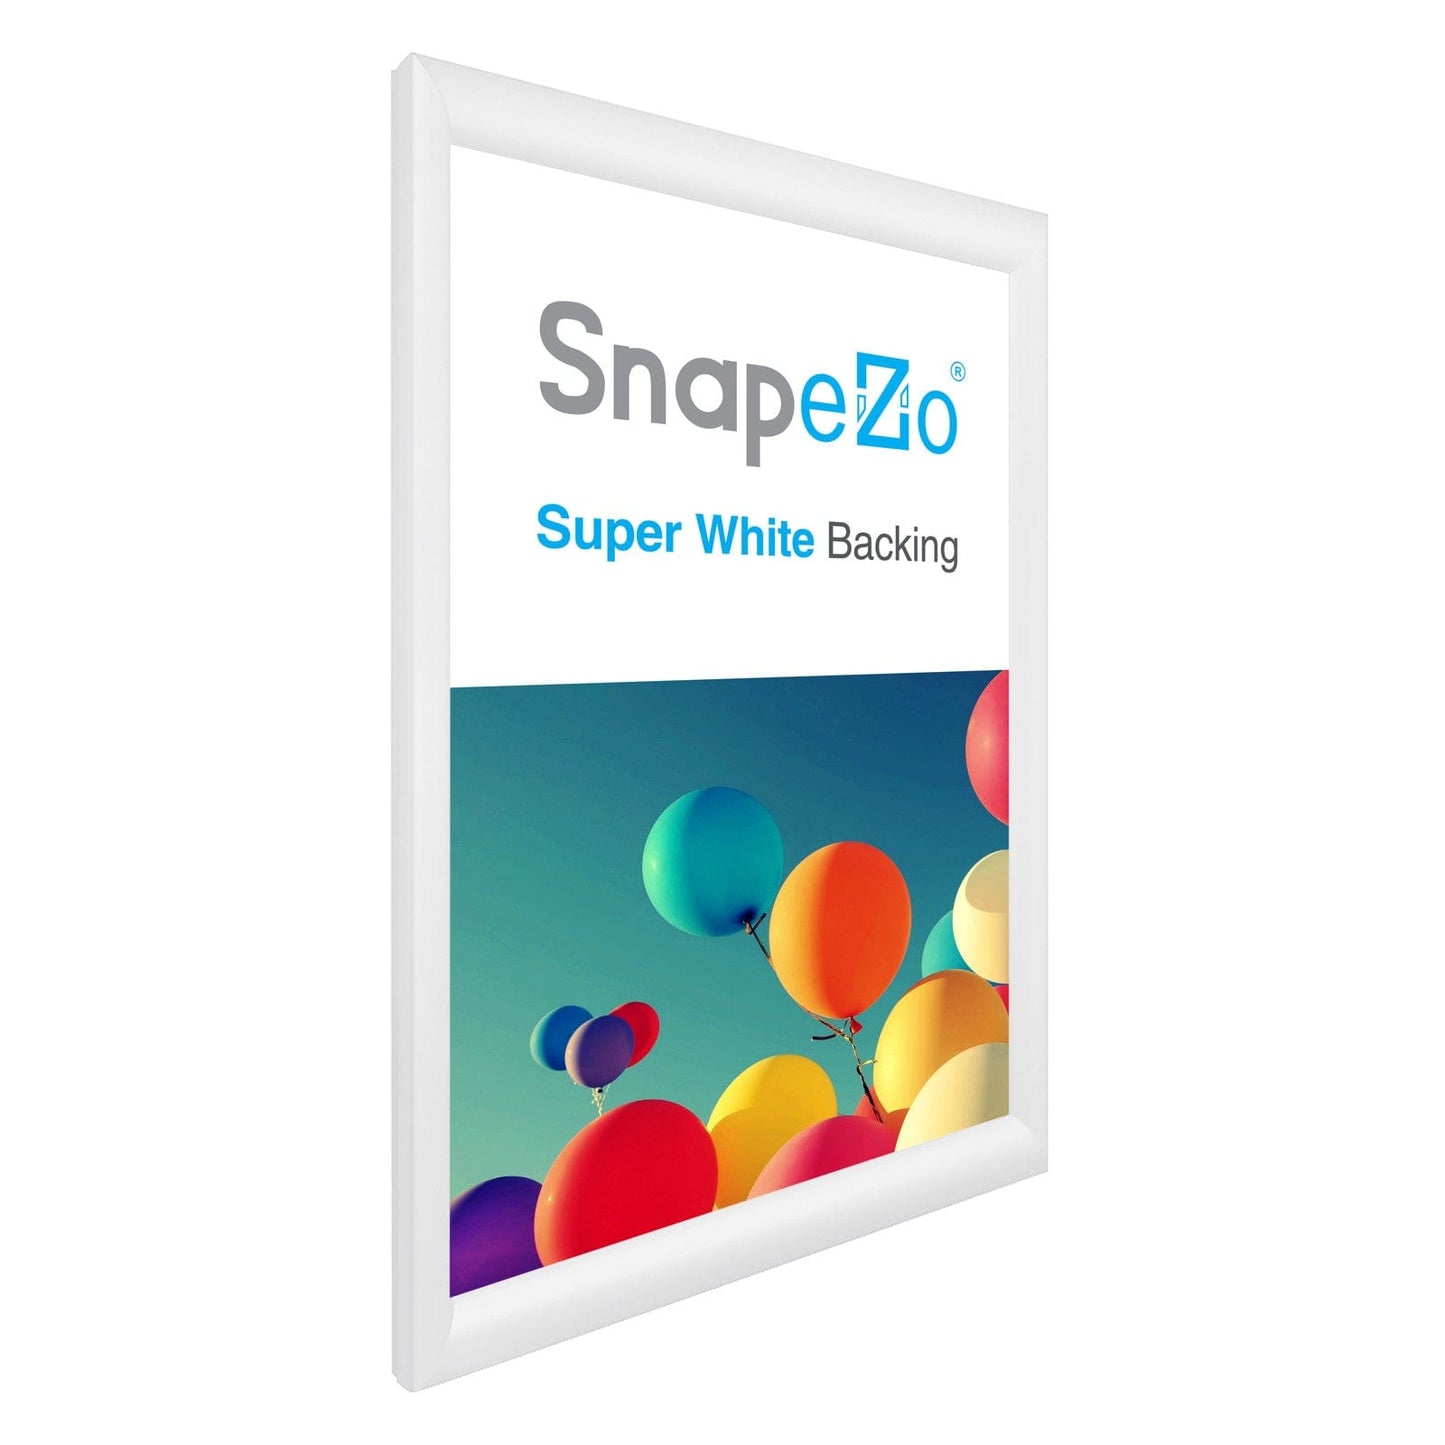 20x29 White SnapeZo® Snap Frame - 1.2" Profile - Snap Frames Direct